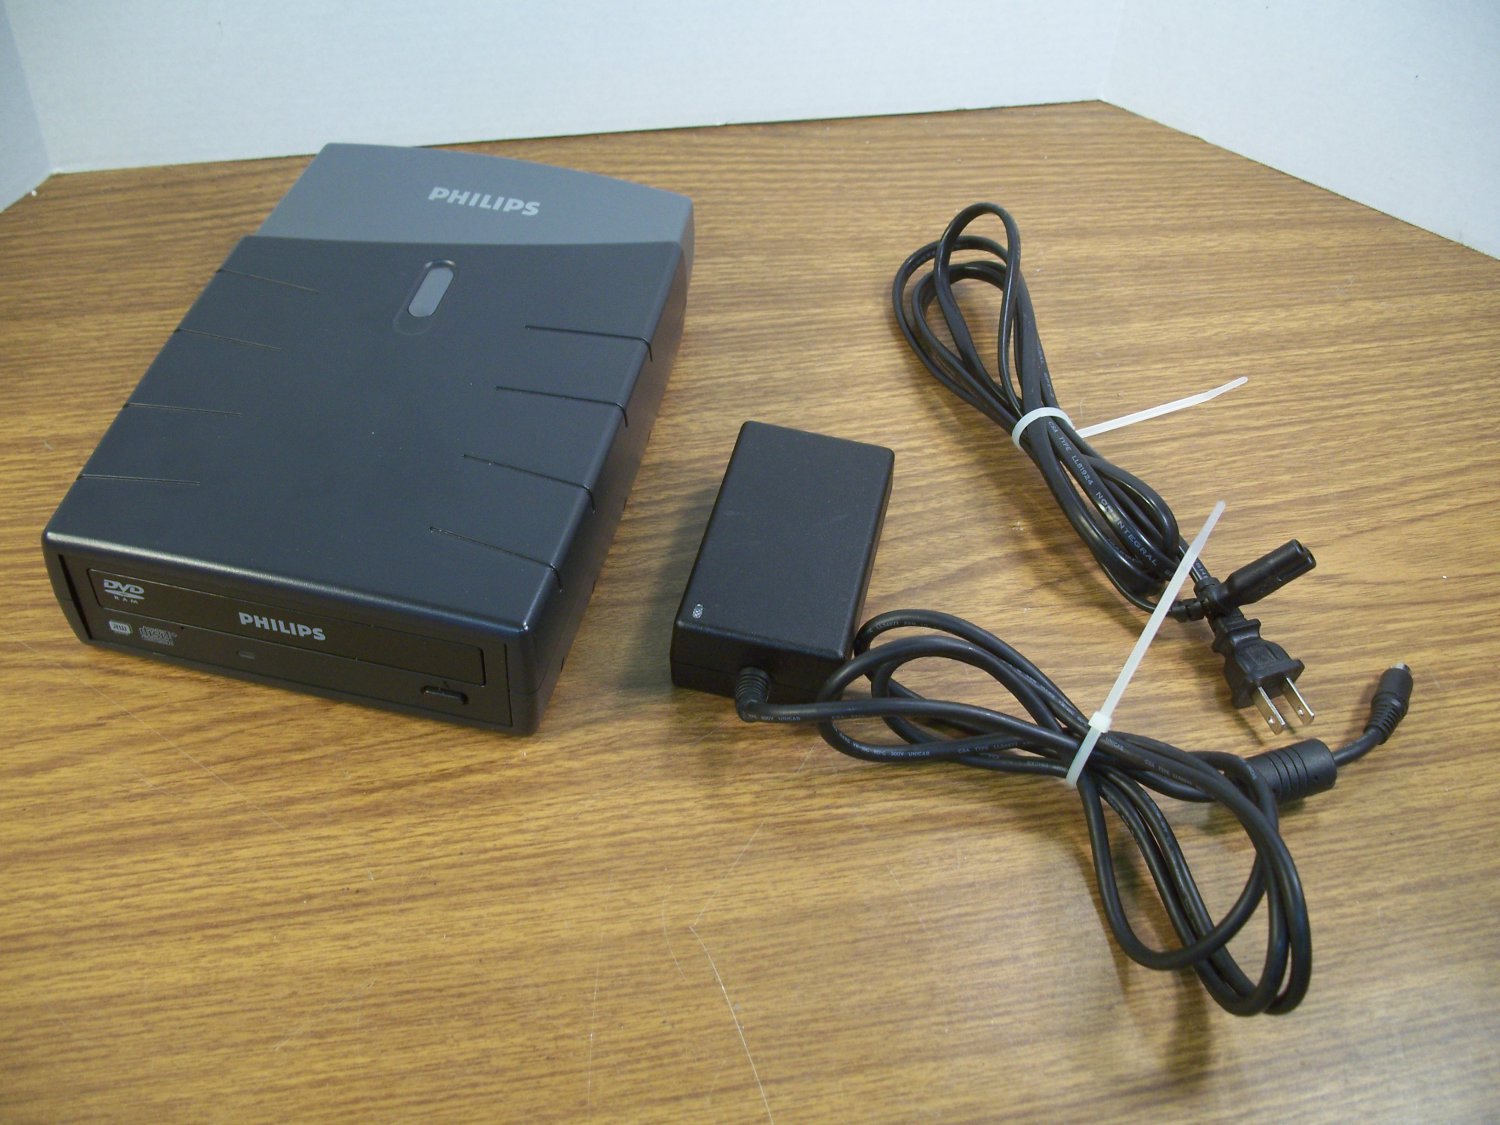 overschot rib moord Philips External DVD Burner USB Drive (SPD3100CC/17) *USED*